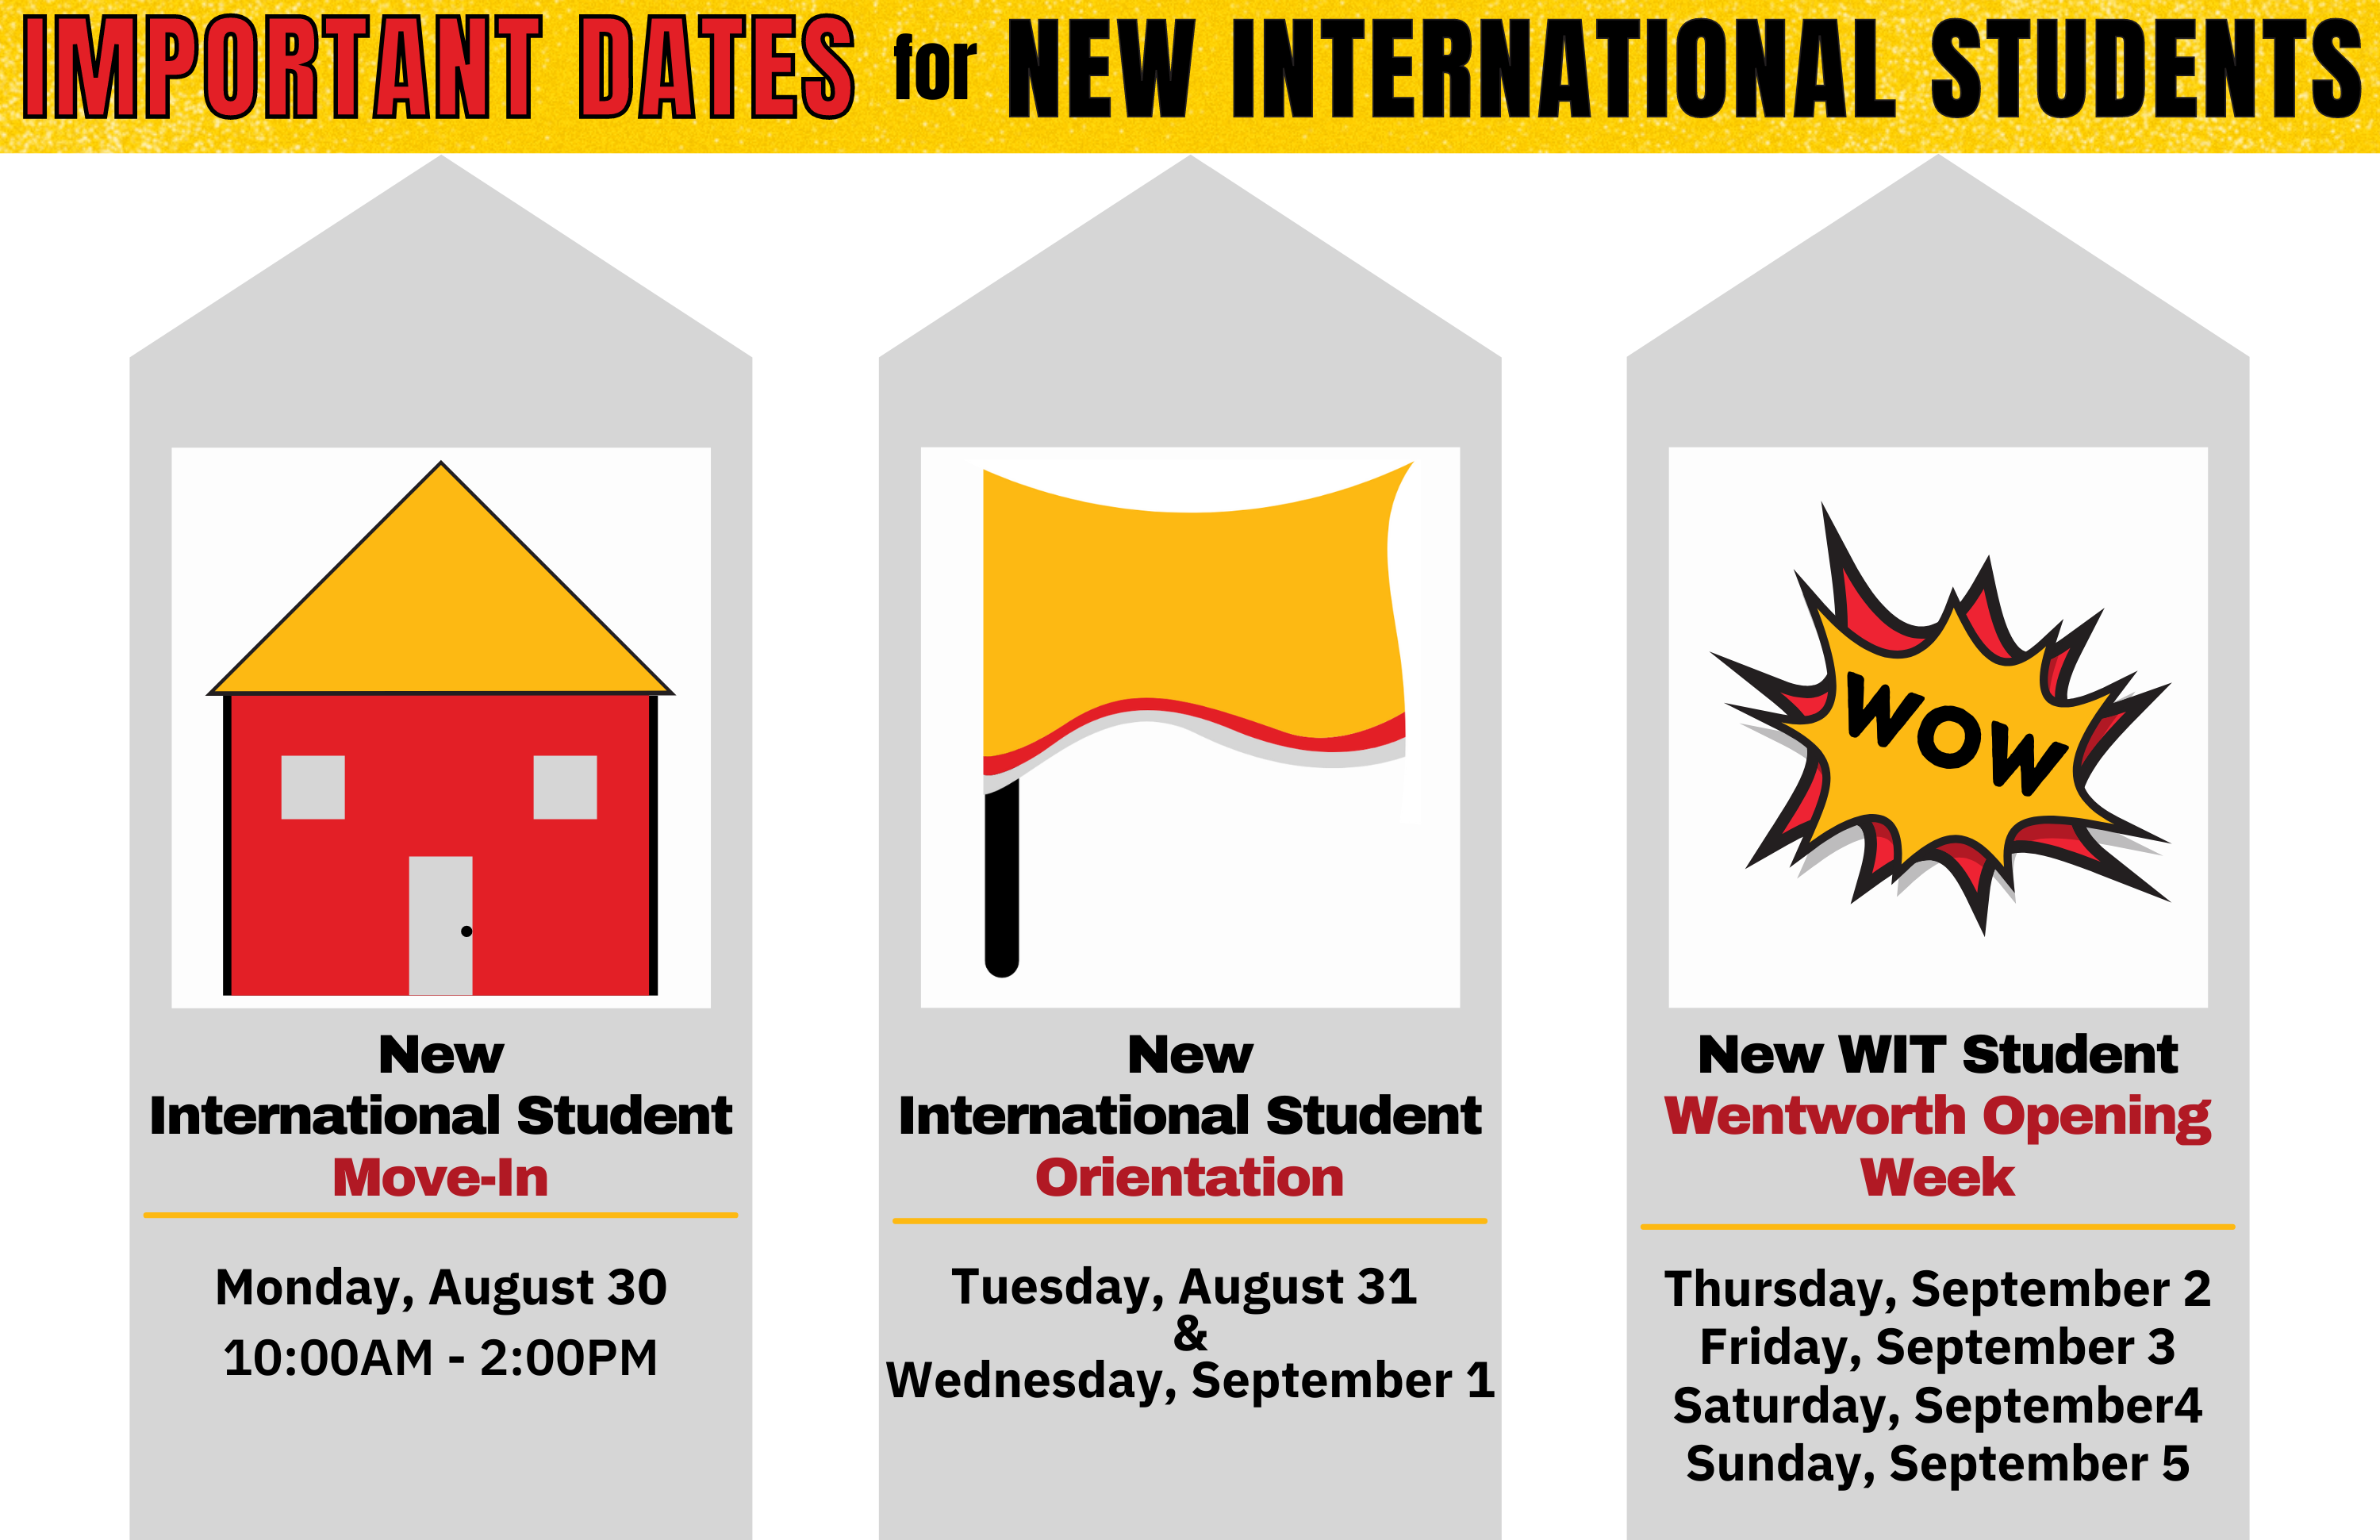 New International Student Information | Wentworth